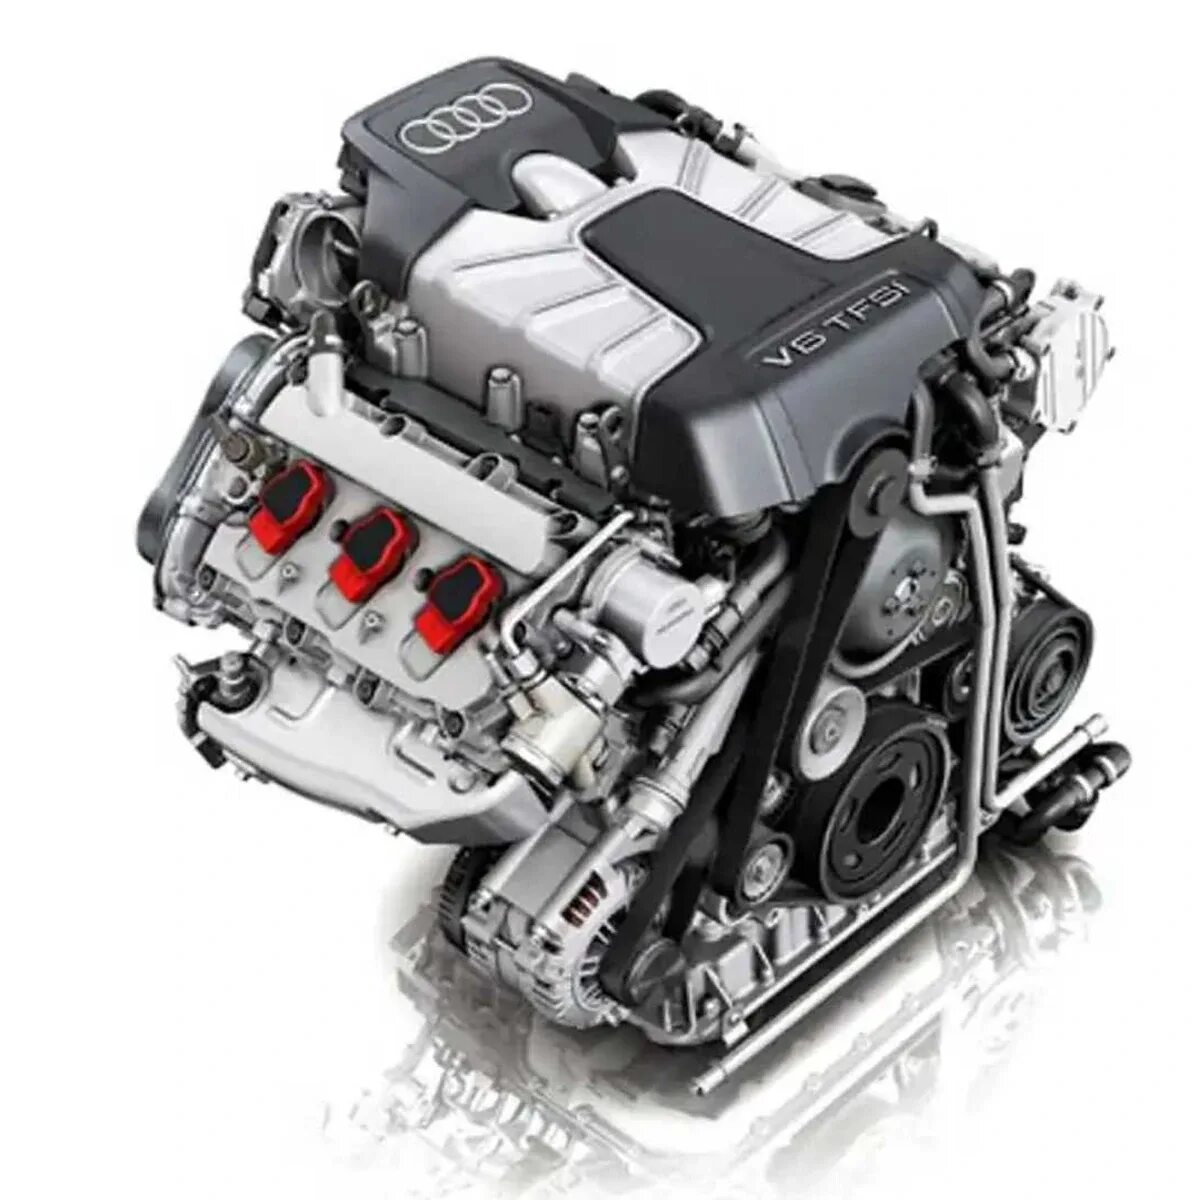 Ауди двиг. Мотор 3.0 TFSI. Audi 3.0 TFSI компрессор. Двигатель Ауди тфси 3.0 литра. Audi a4 a5 a6 3,0 TFSI v6.